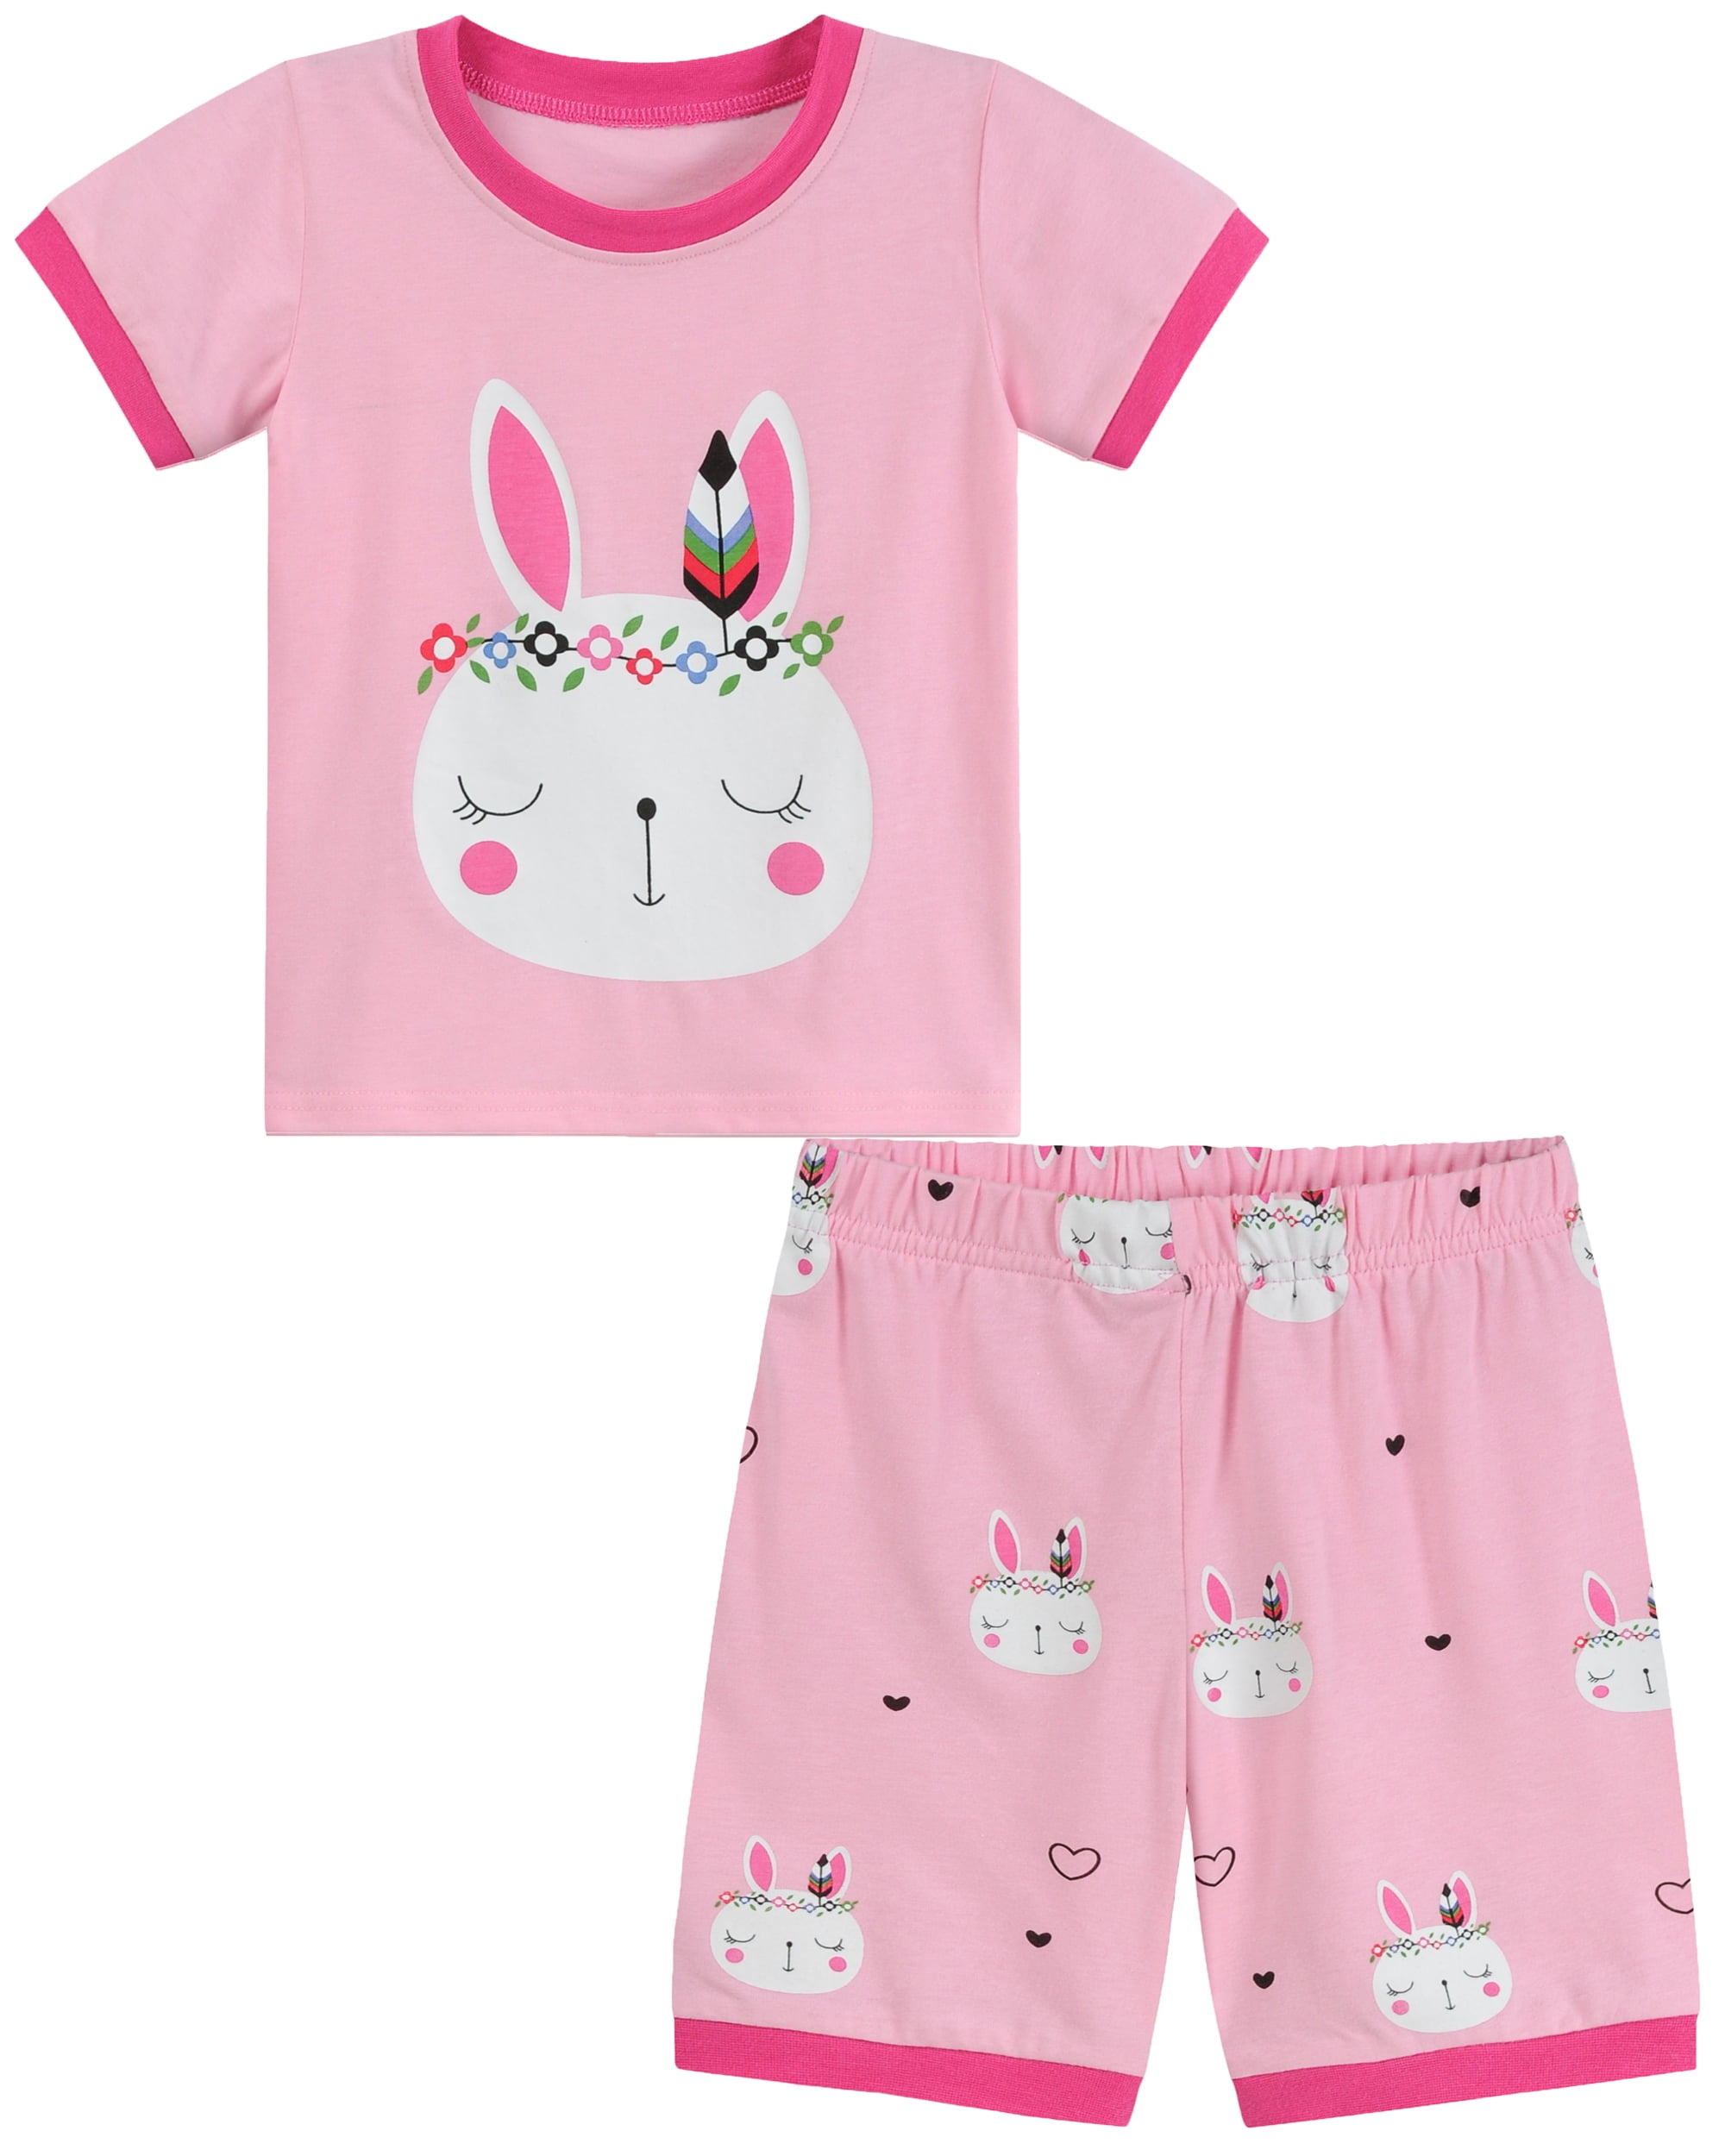 Toddler Girl's Easter Bunny hearts Cotton Pajama Set 